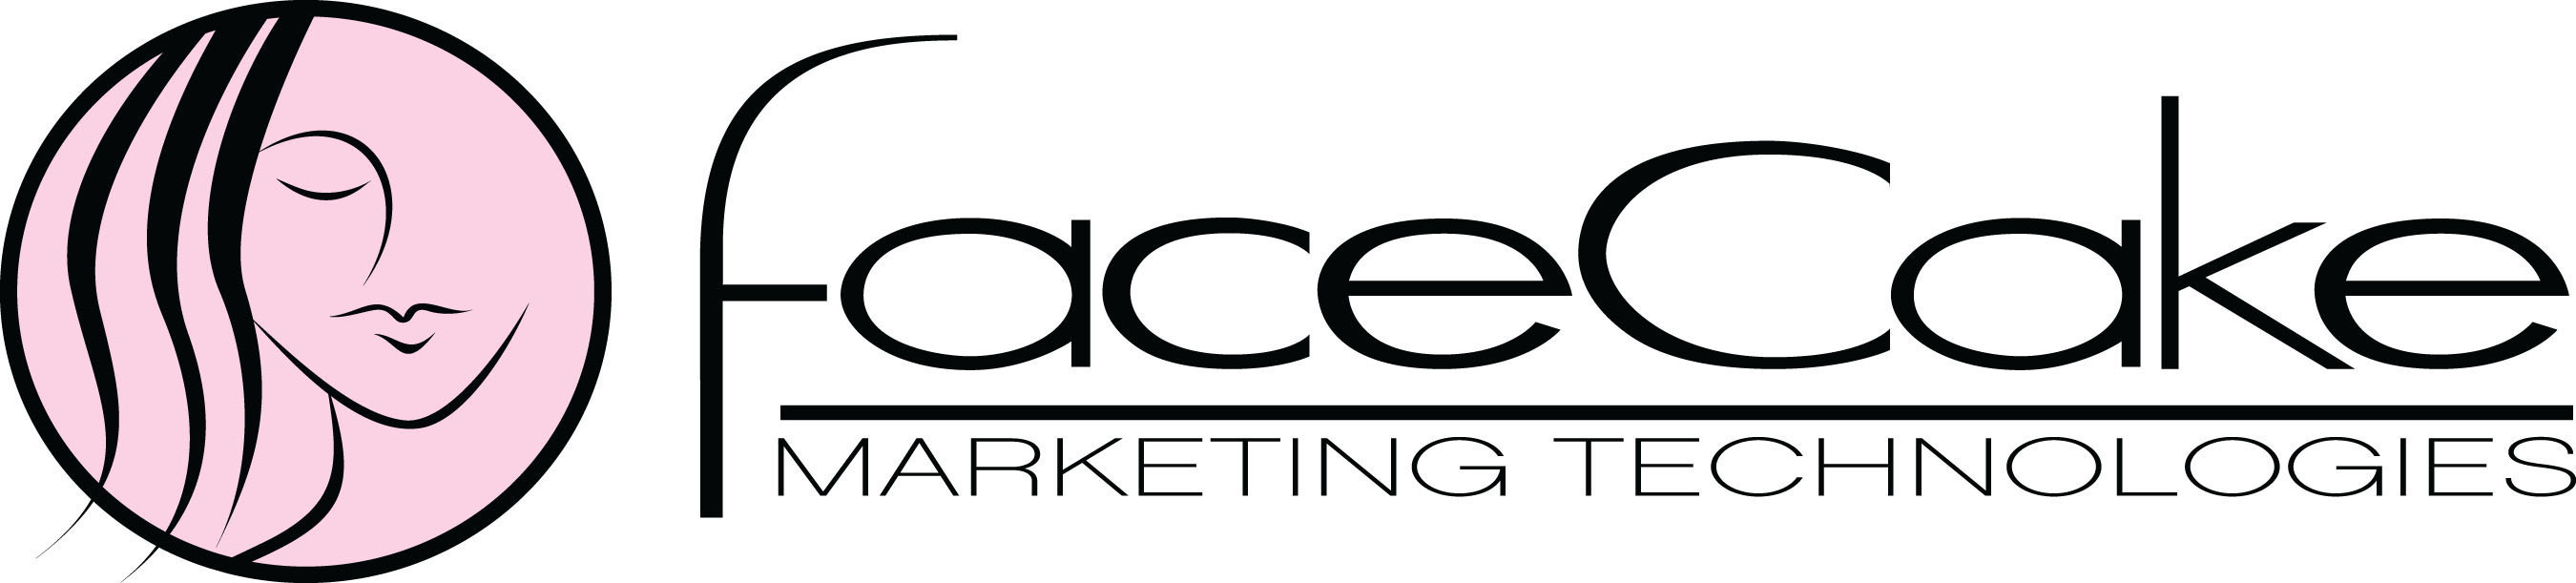 FaceCake Marketing Technologies Logo (PRNewsFoto/FaceCake Marketing Technologies)